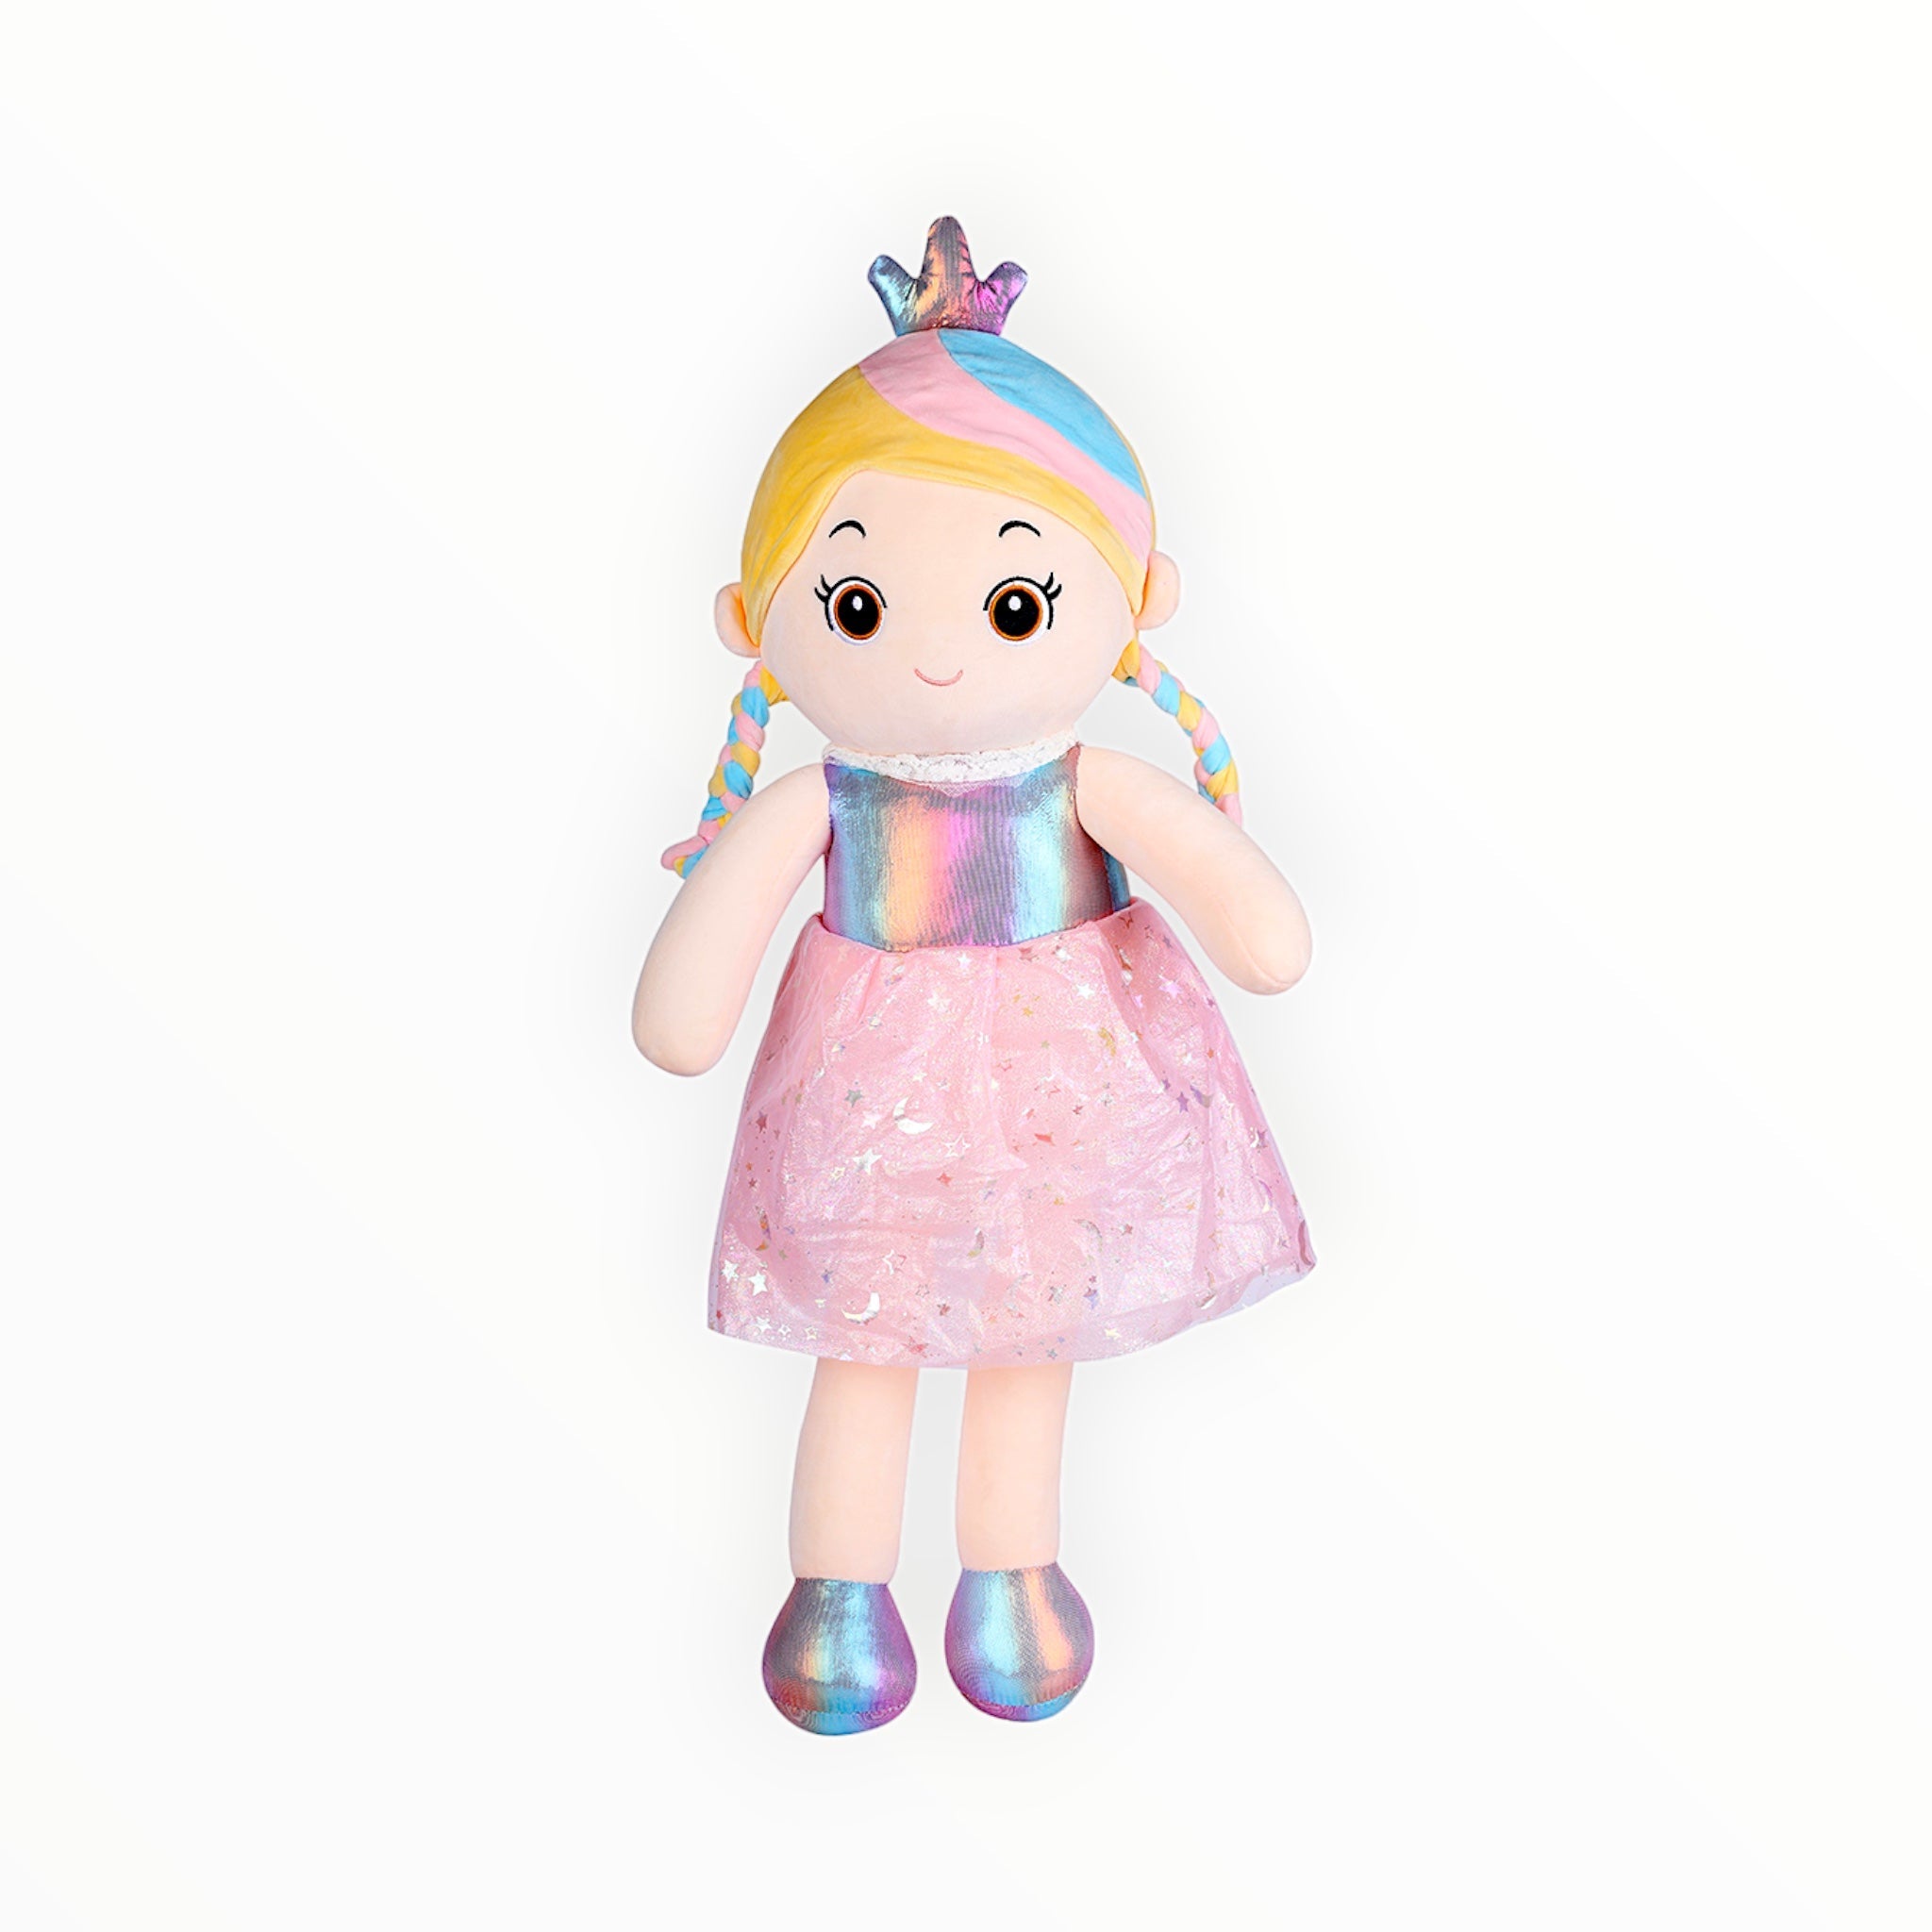 Enchanting Princess Doll Soft Toy